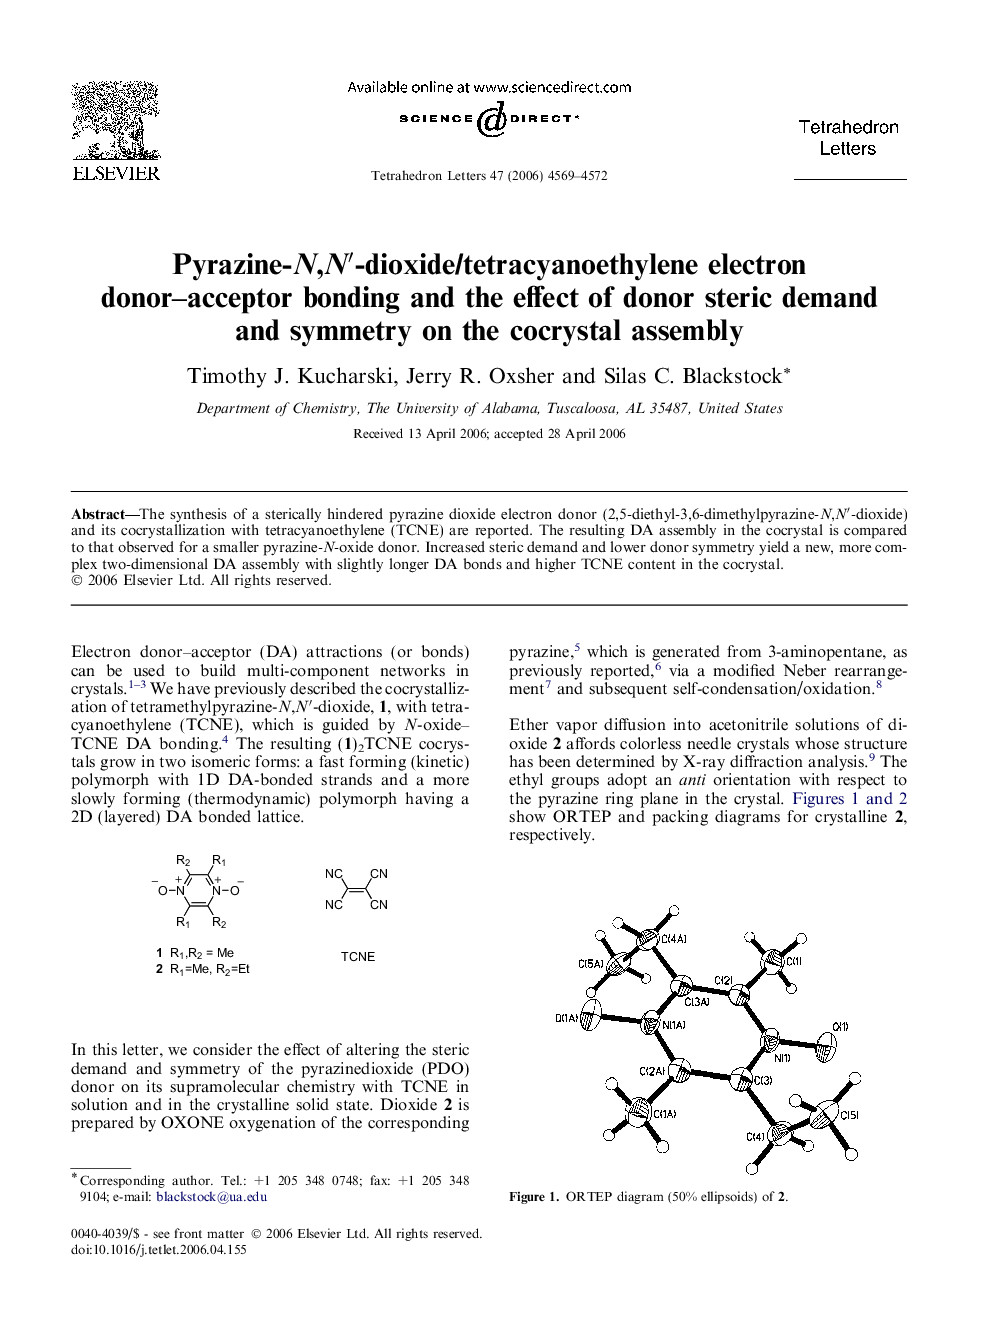 Pyrazine-N,Nâ²-dioxide/tetracyanoethylene electron donor-acceptor bonding and the effect of donor steric demand and symmetry on the cocrystal assembly